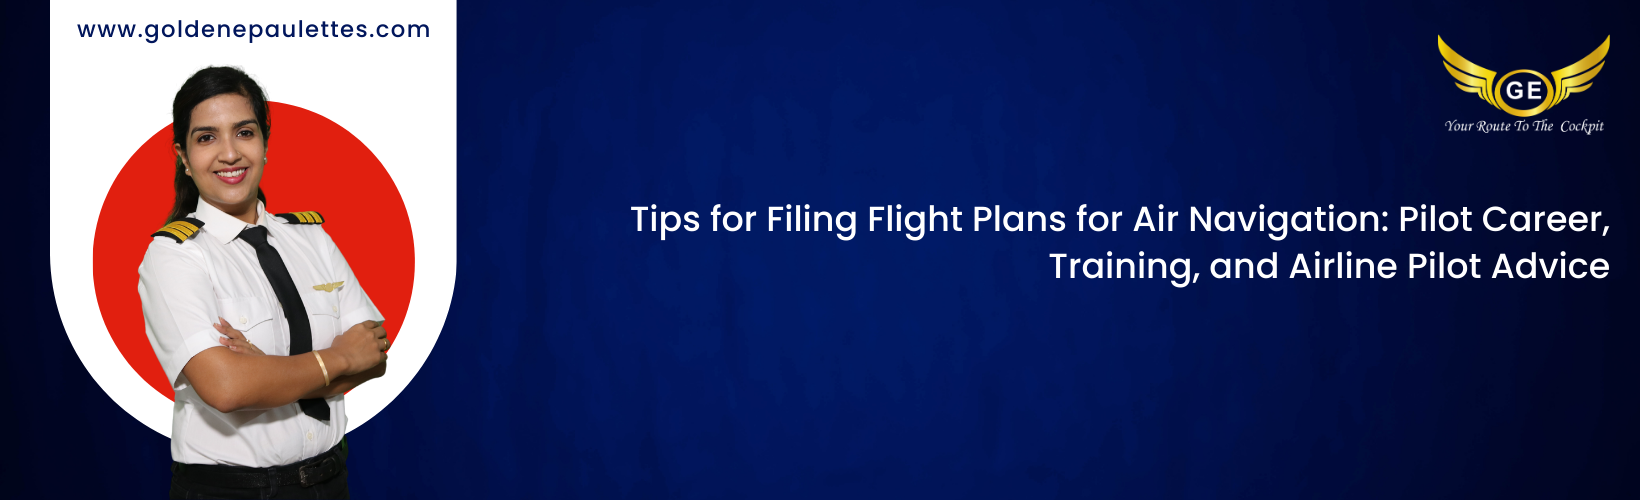 Tips for Filing Flight Plans for Air Navigation